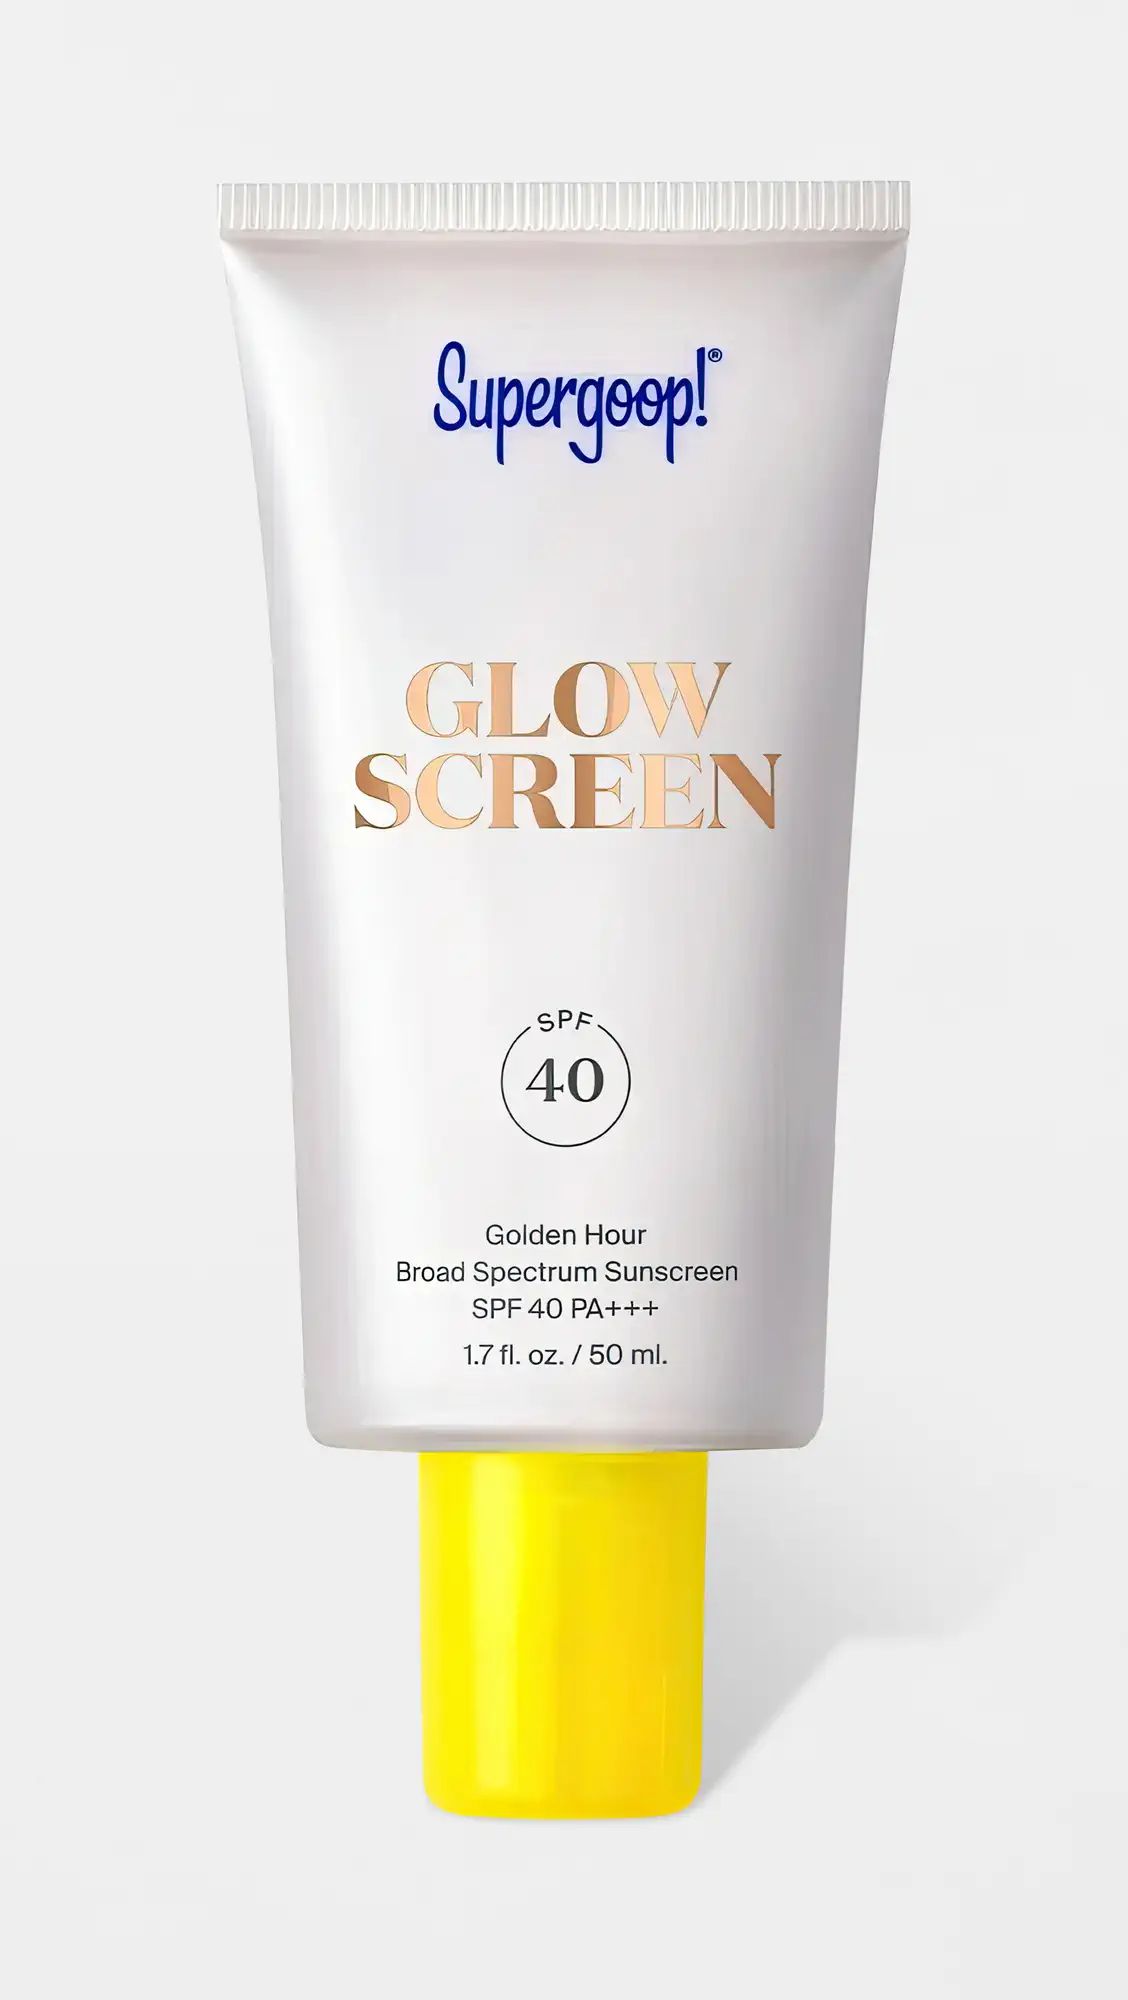 Glowscreen SPF 40 | Shopbop